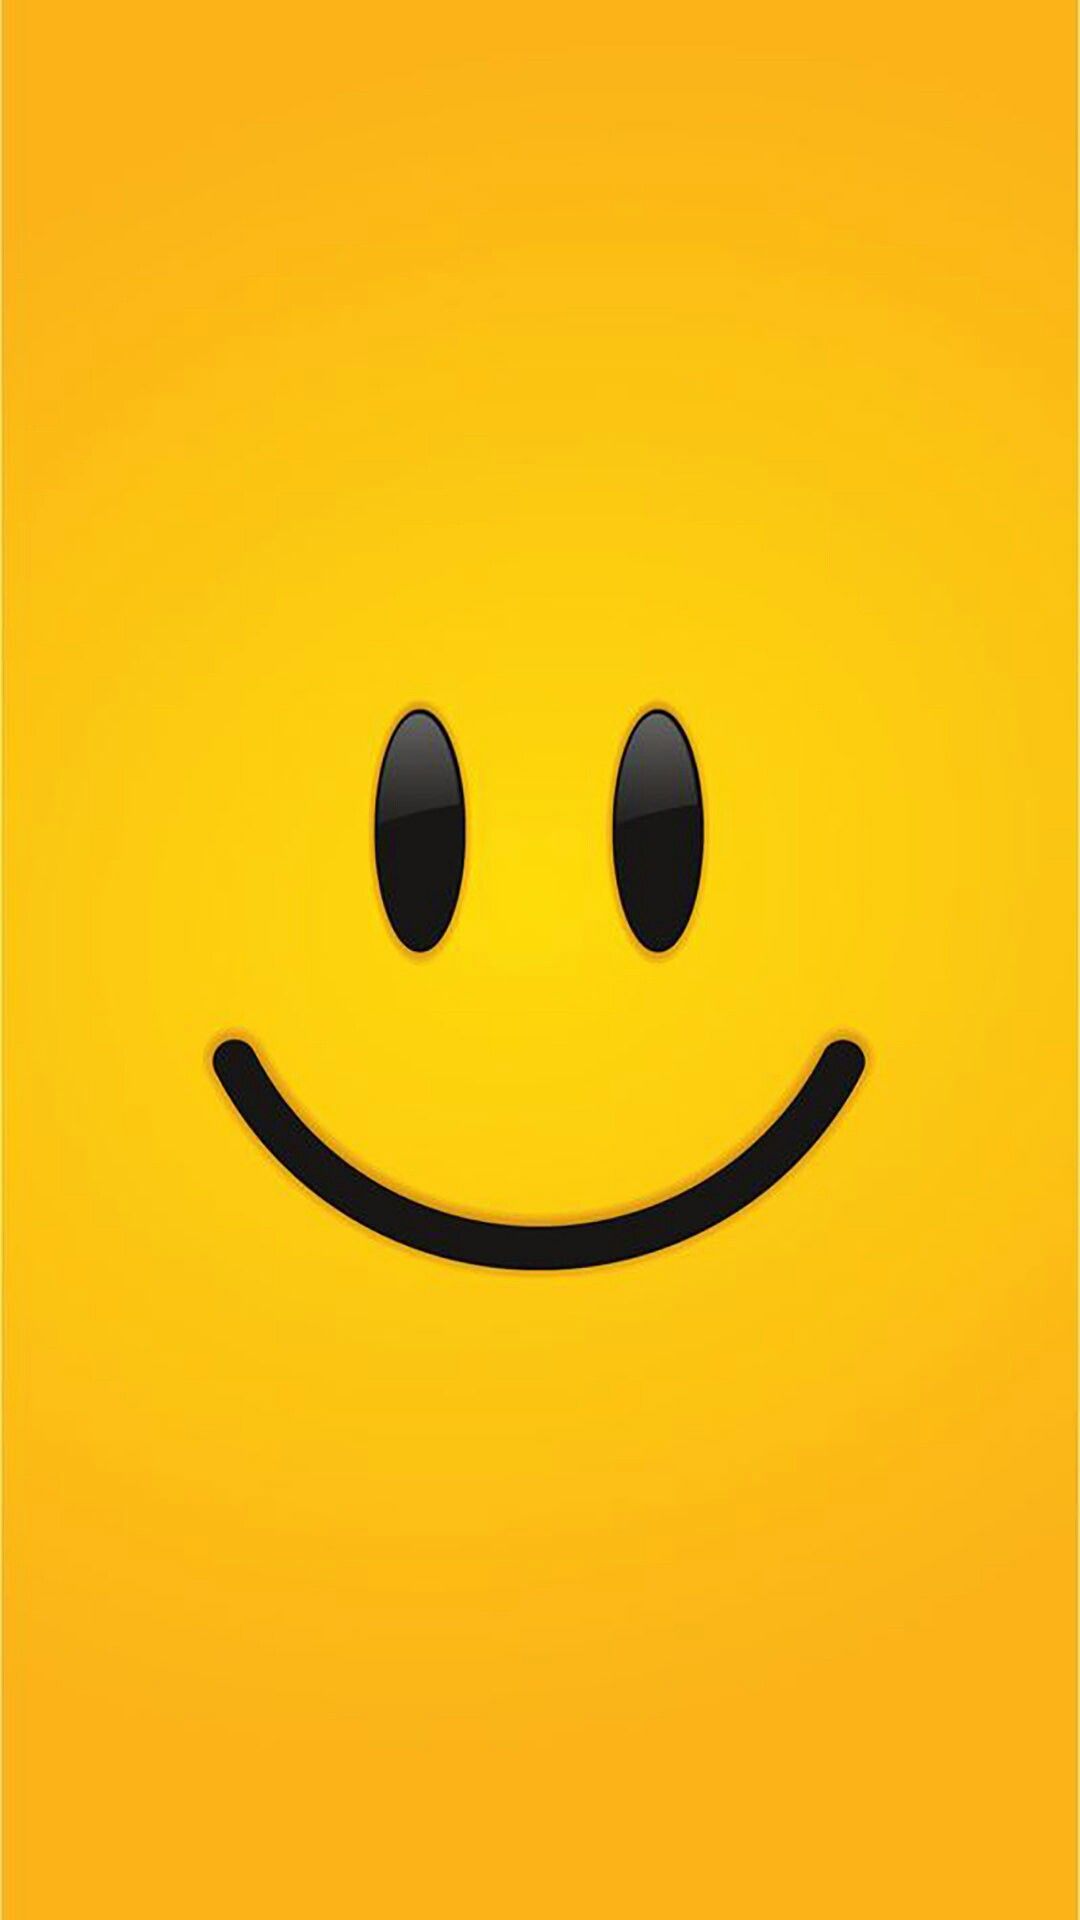 Smiley Face Wallpaper Iphone - HD Wallpaper 